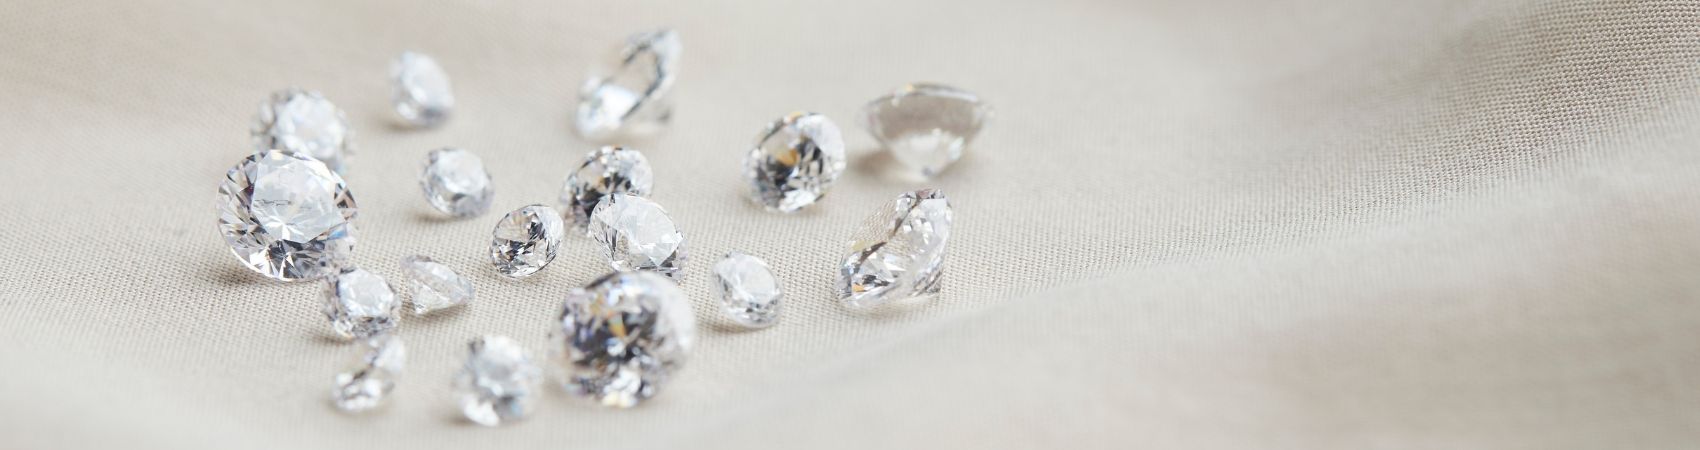 Diamanter | Carat & Smykker hos ToftJessen.dk